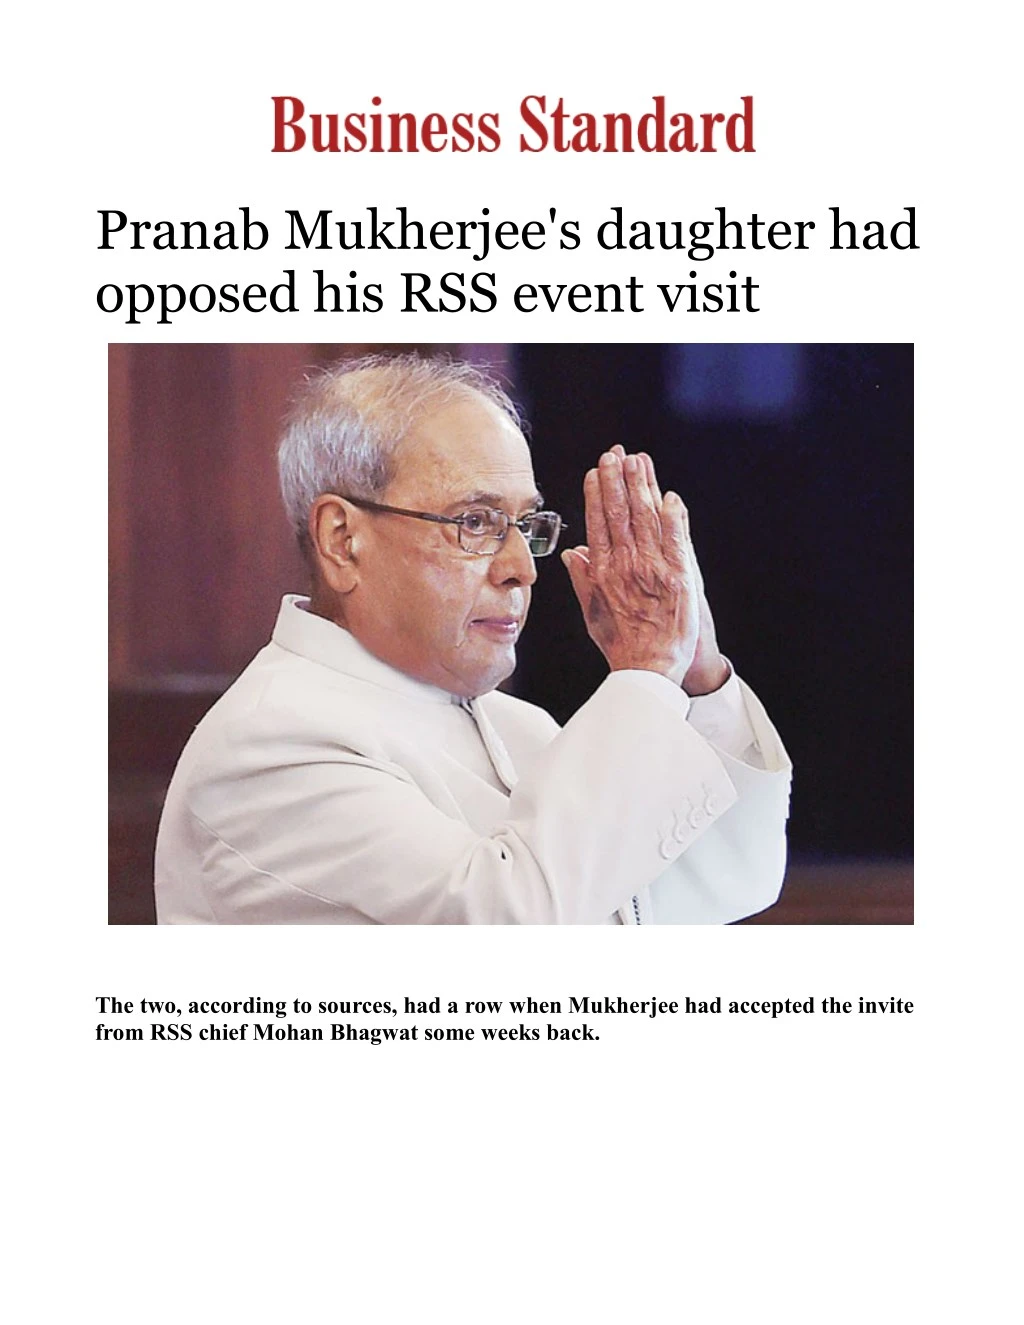 pranab mukherjee s daughter had opposed